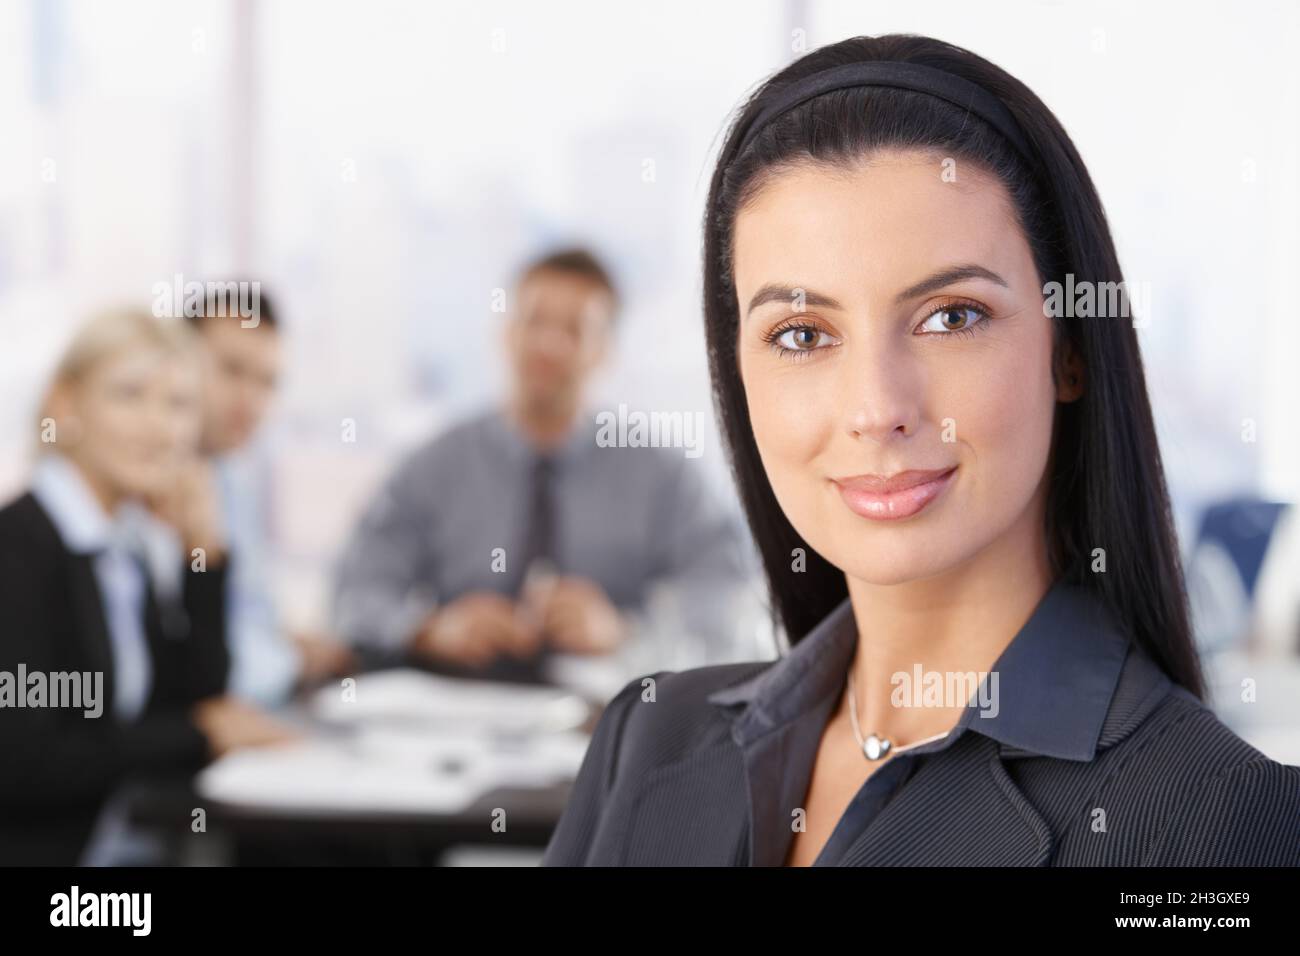 Portrait of smiling businesswoman Stock Photo